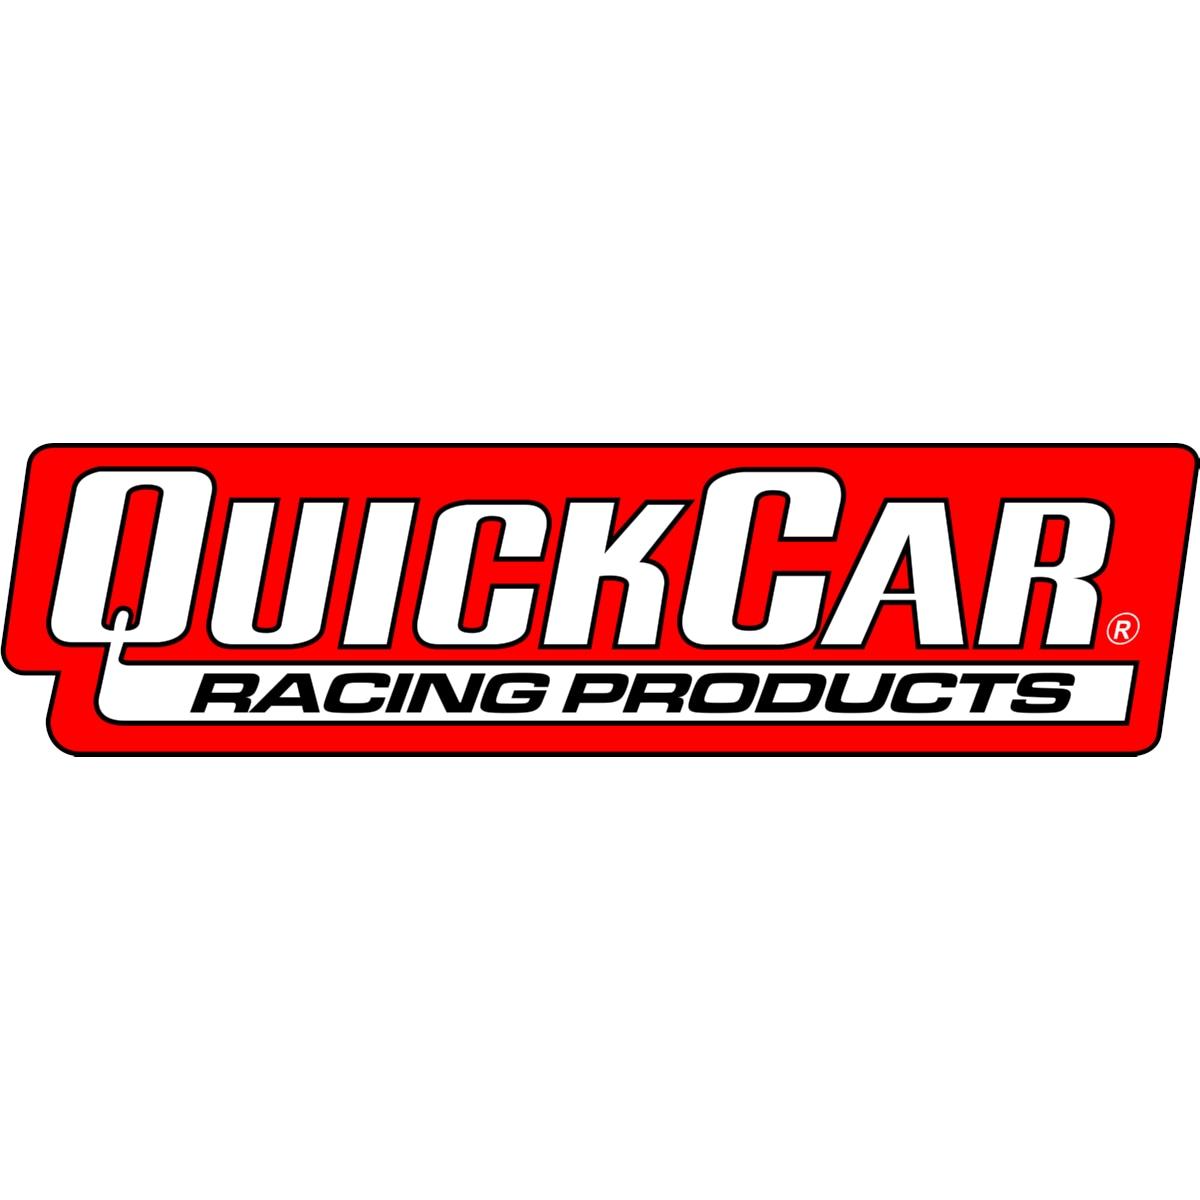 Quickcar